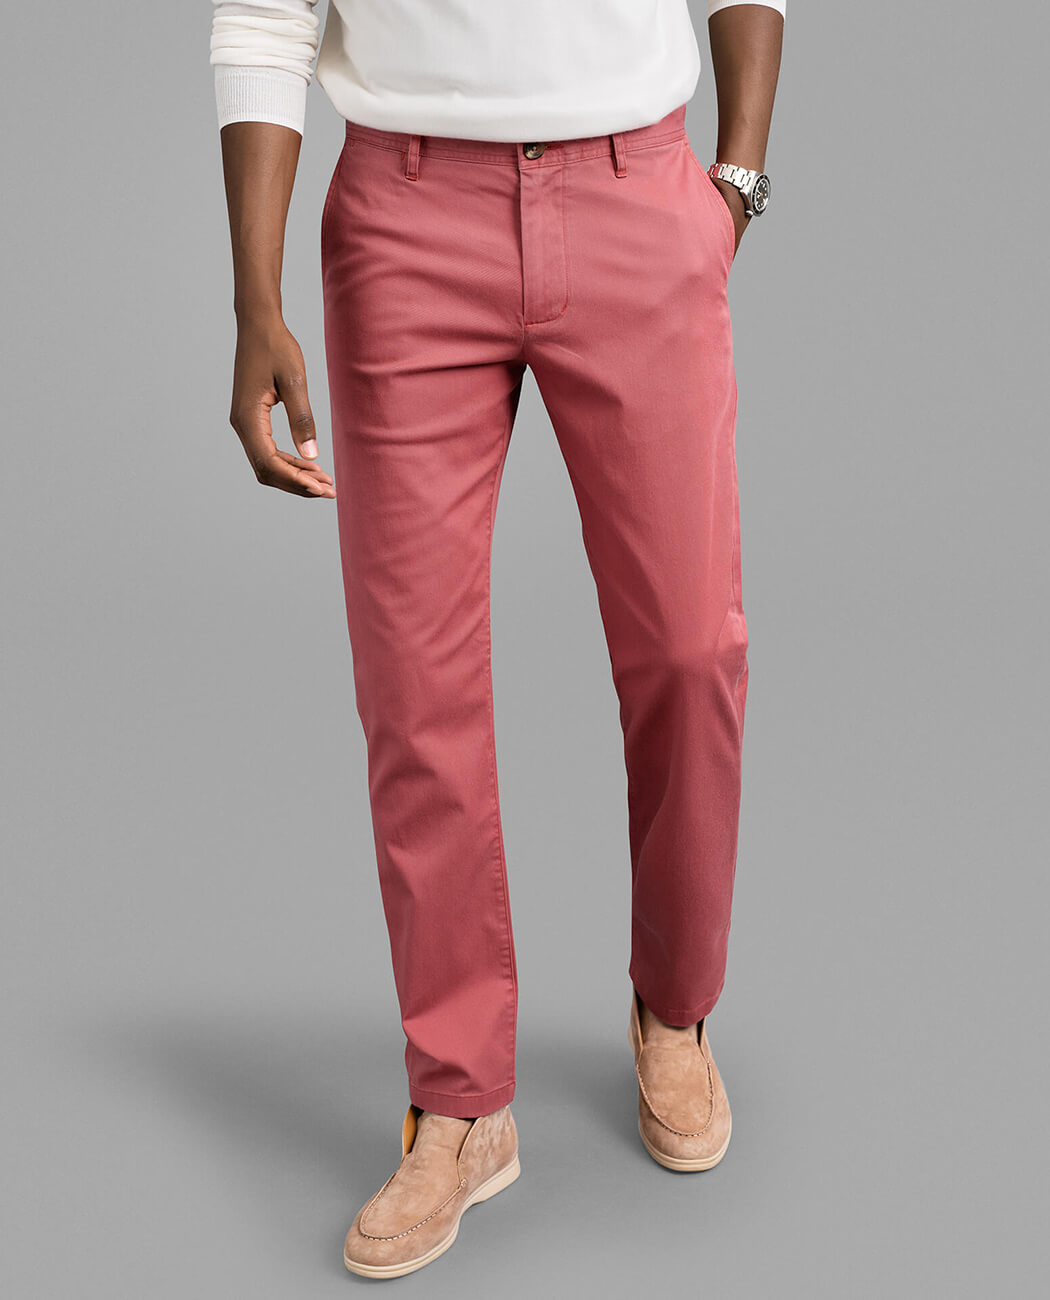 Shop Custom Pants | Men's Chinos Summer Pants - Proper Cloth